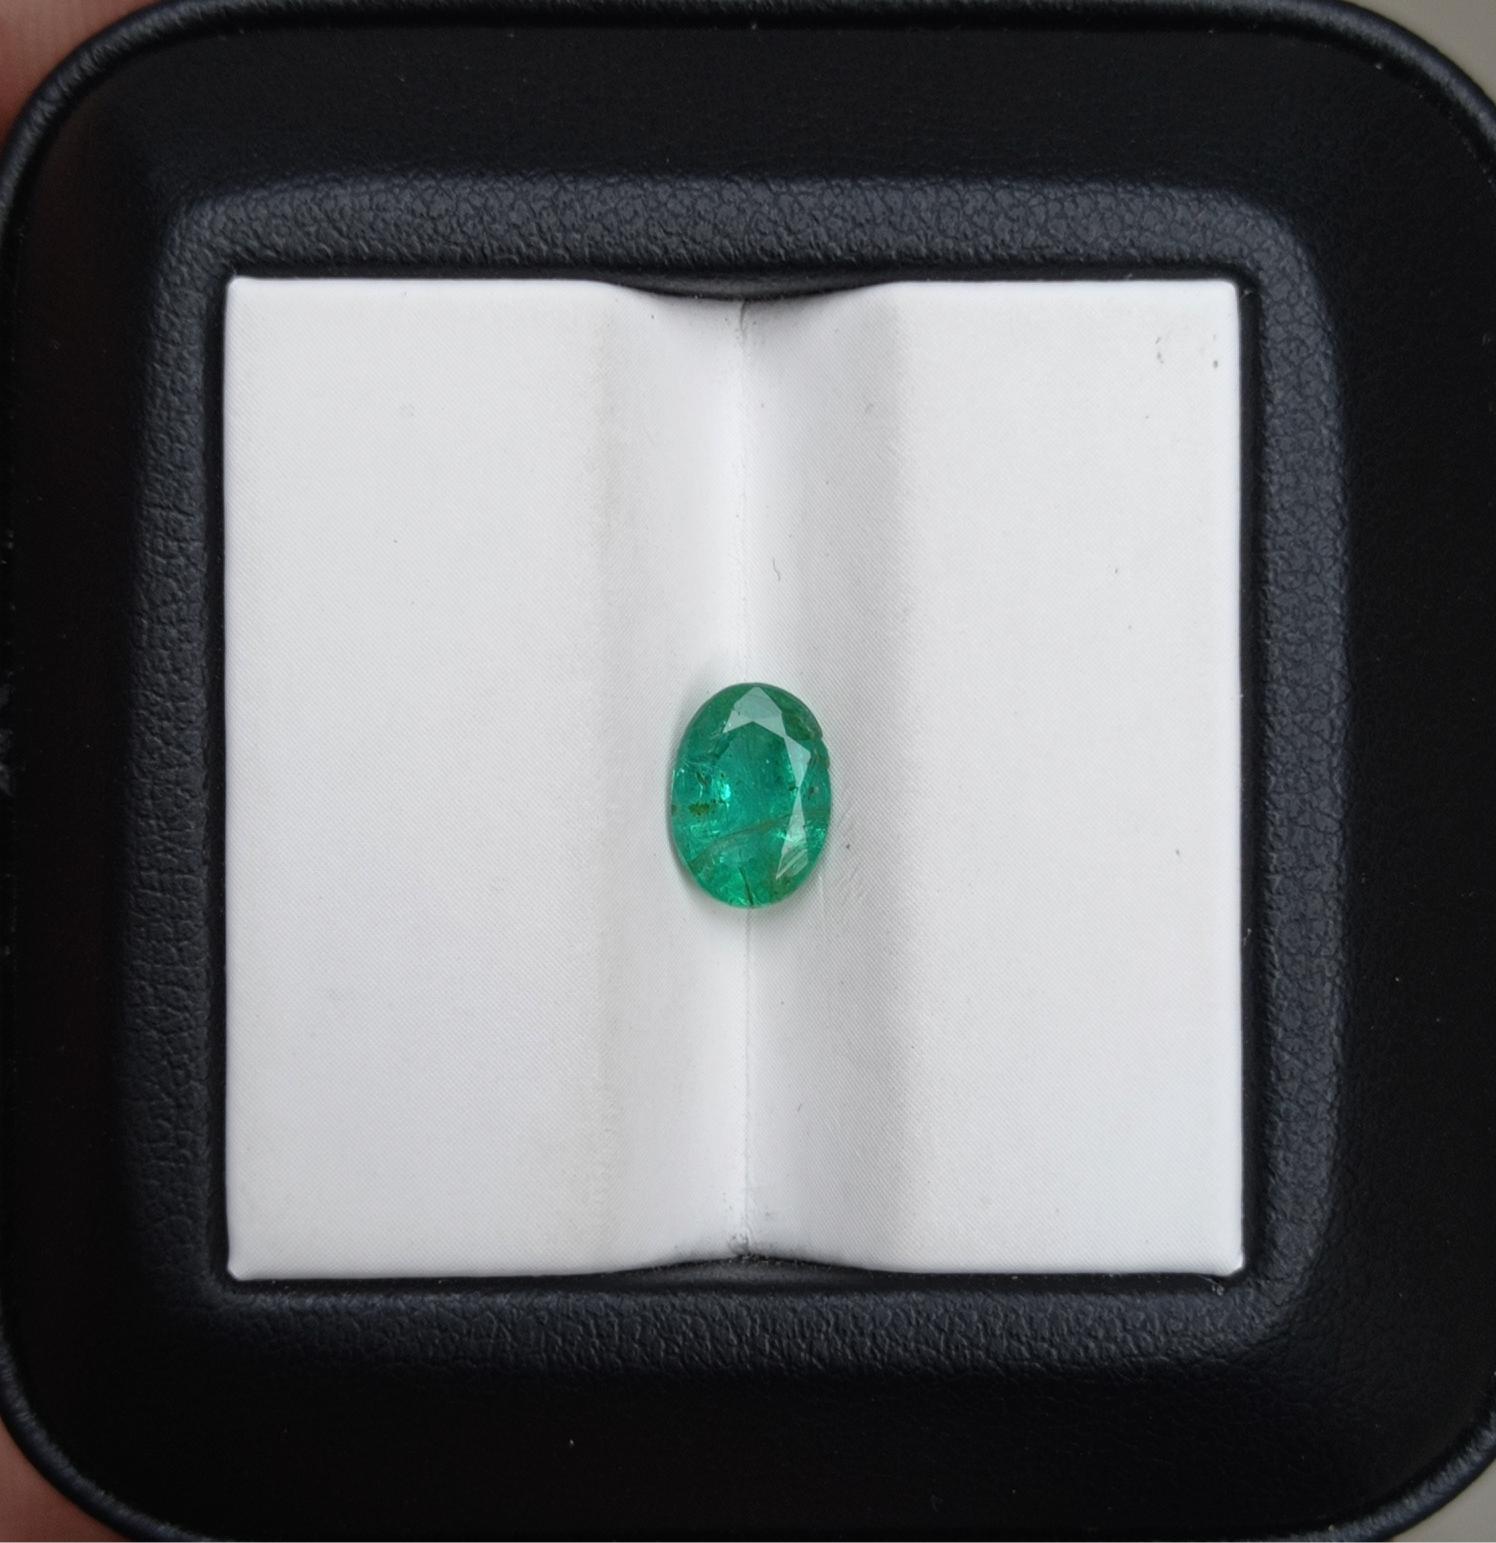 0.95ct Emerald for sale - Budh Ratna - Zamurd - Pachu Stone, Markat Mani Stone - 8x6x3.5mm